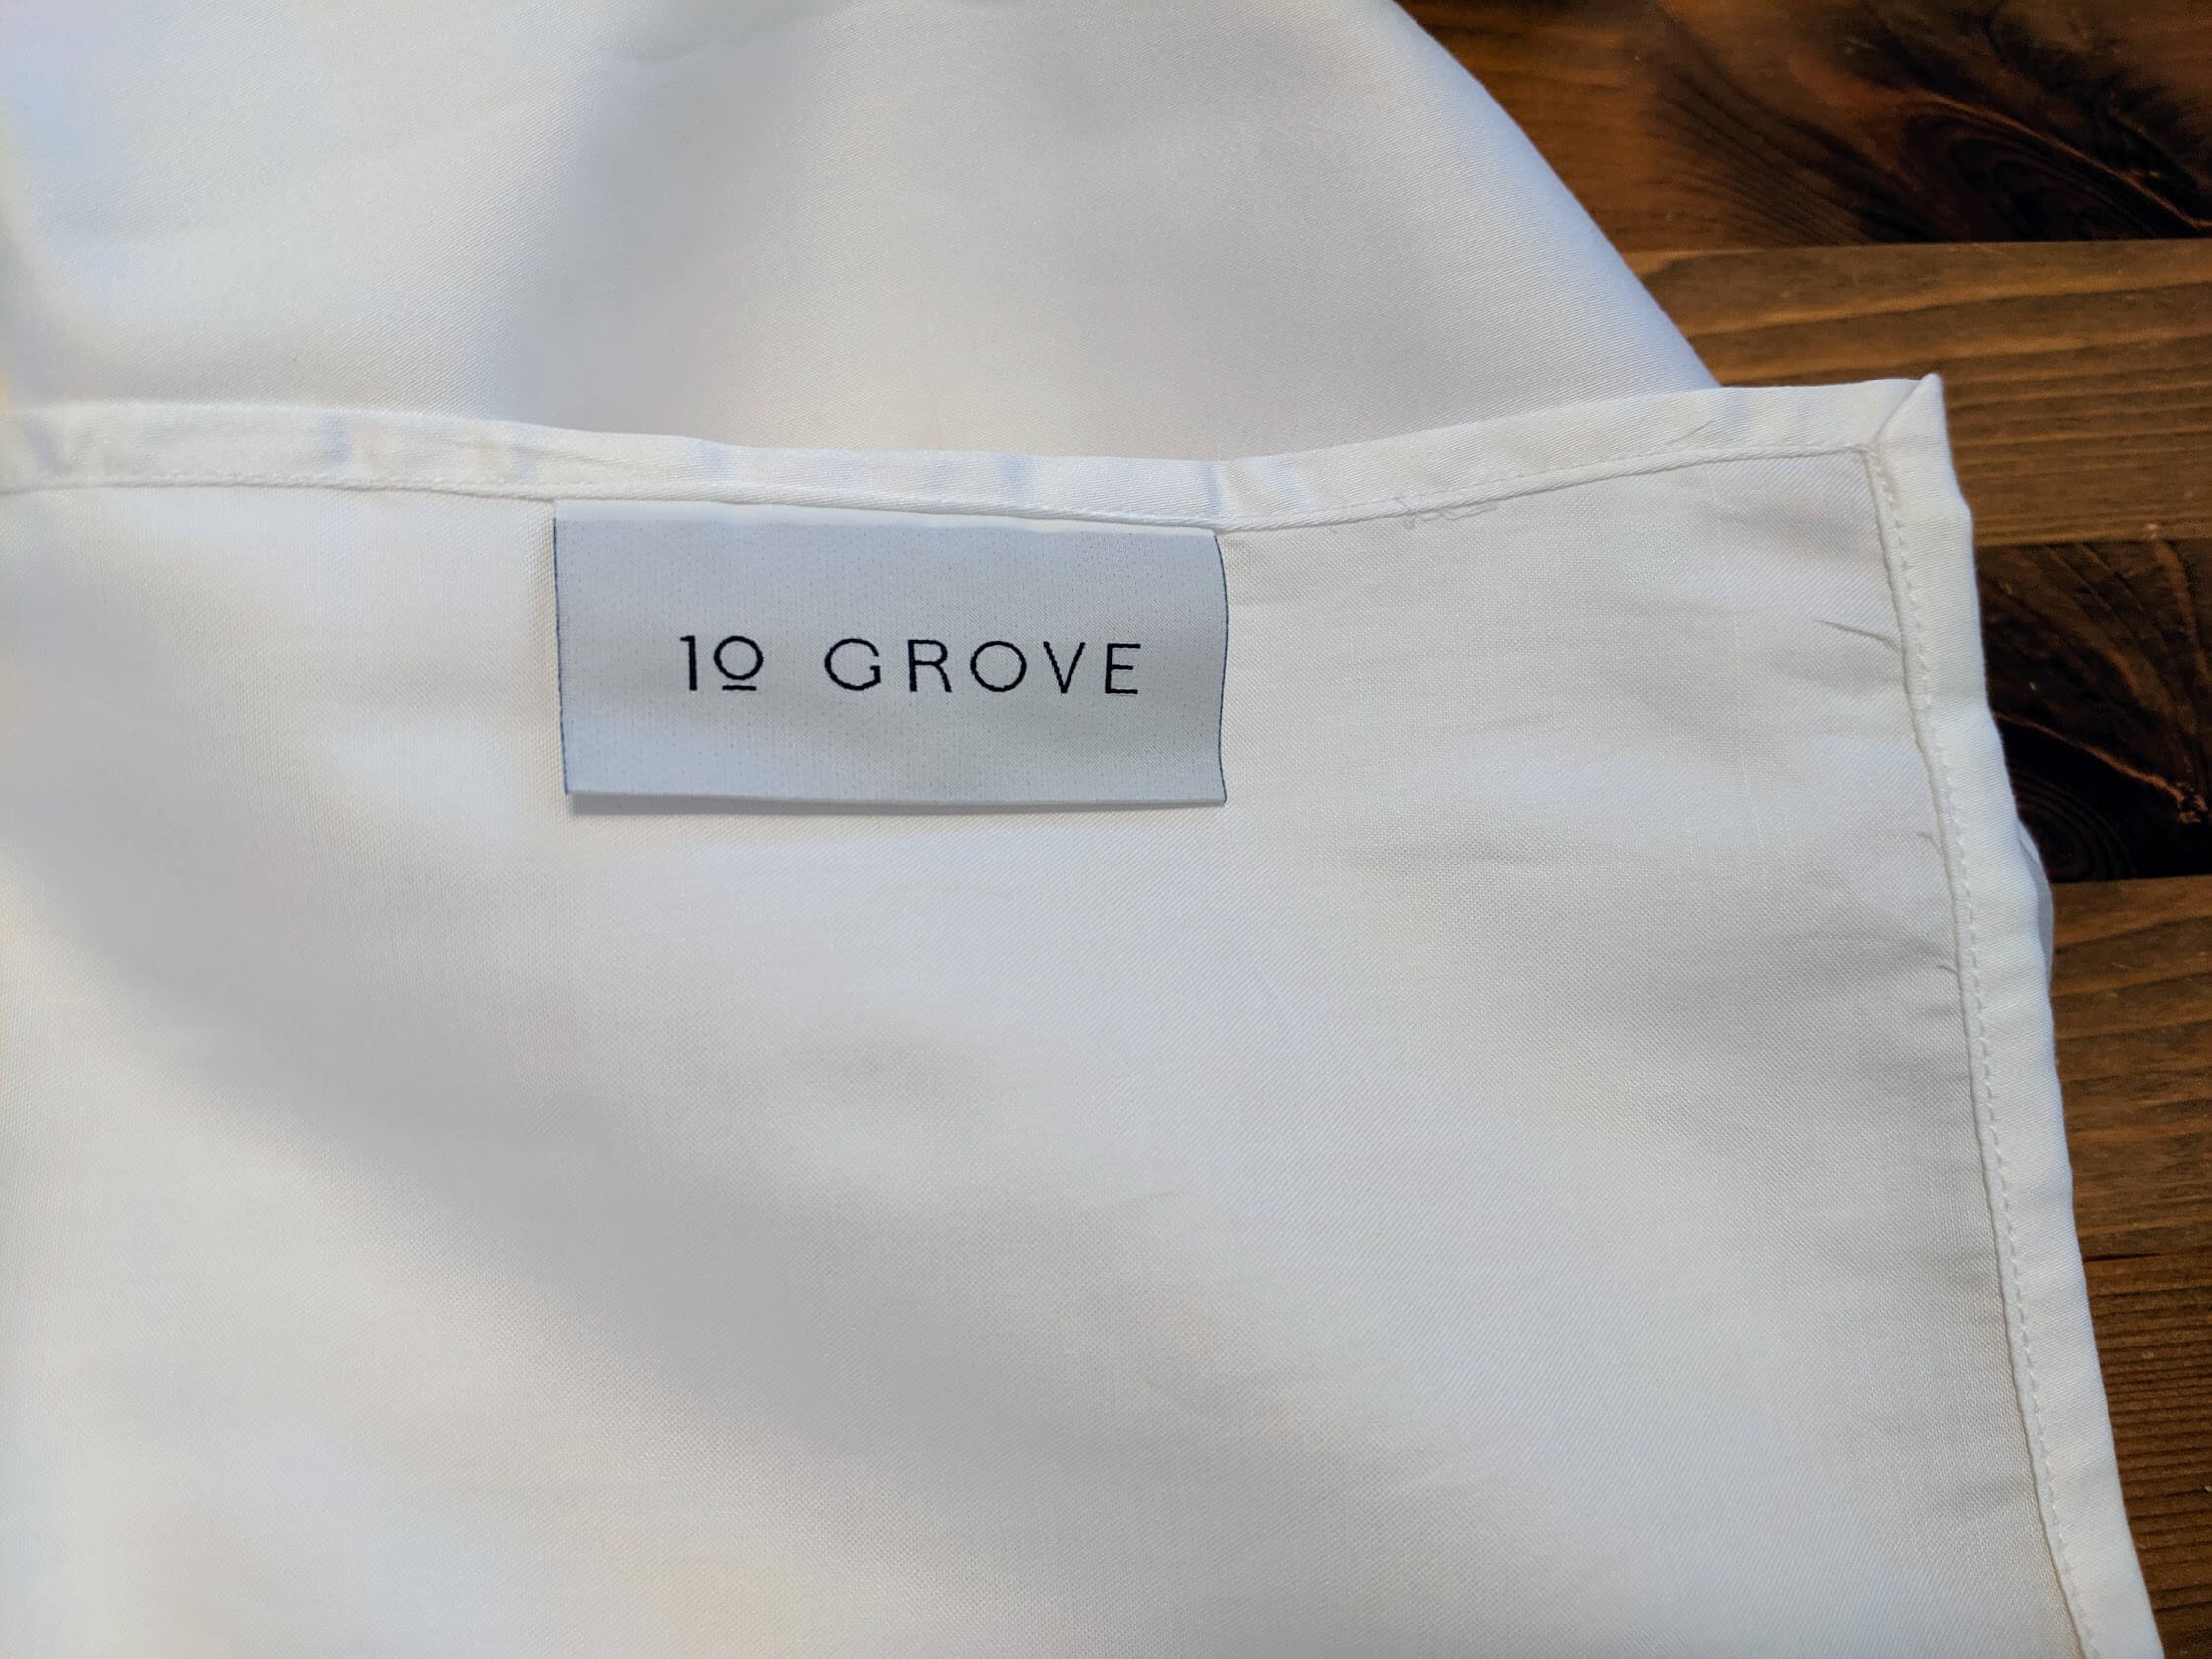 10 grove label